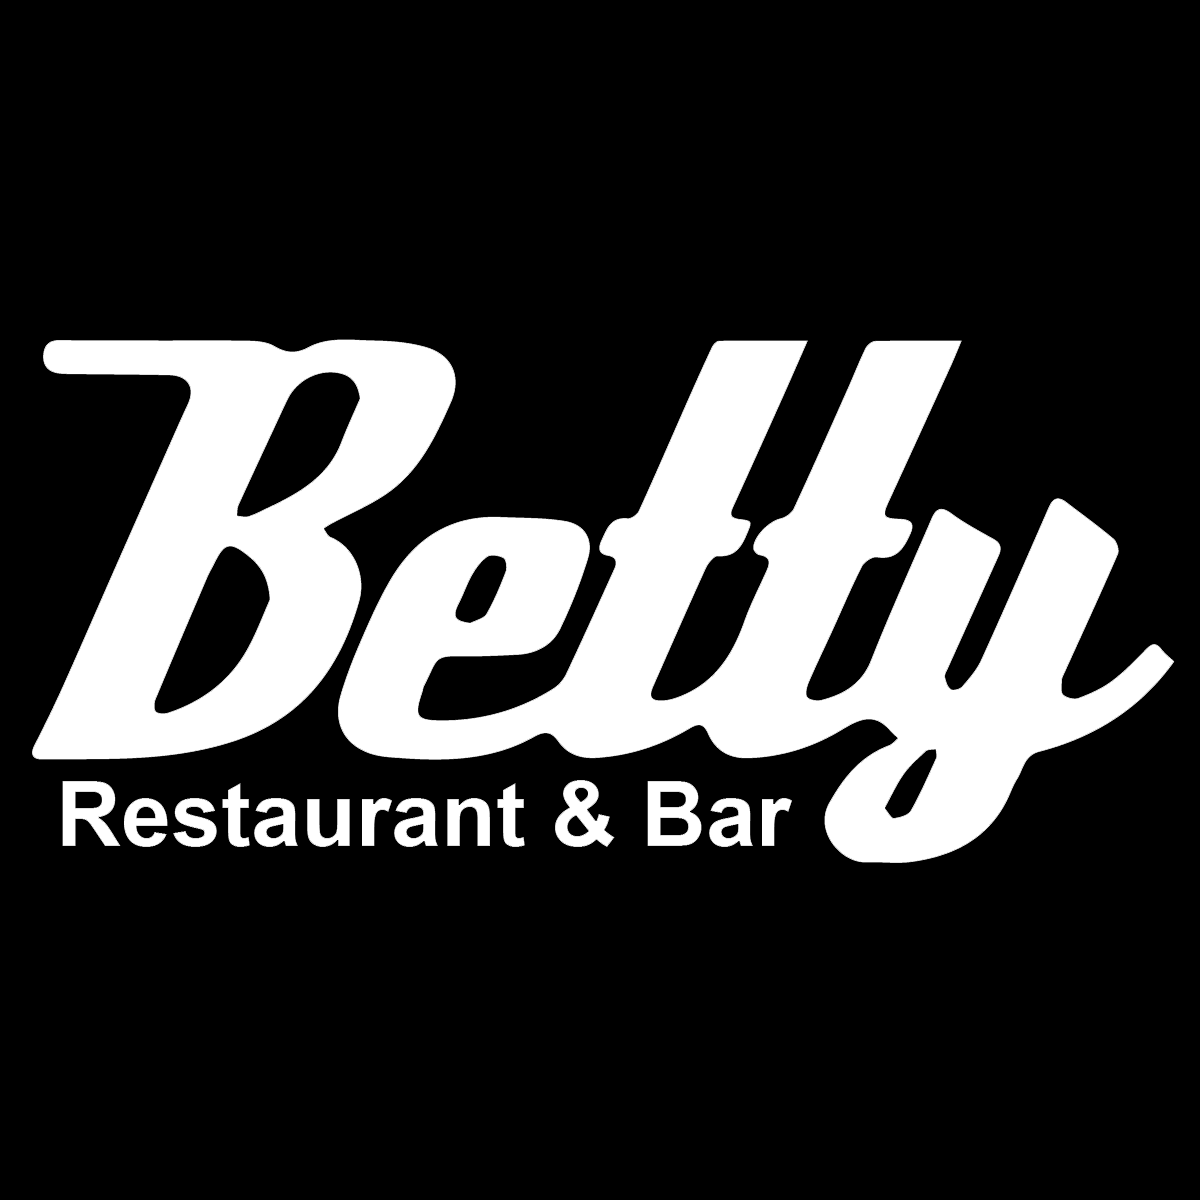 Betty Restaurant & Bar logo